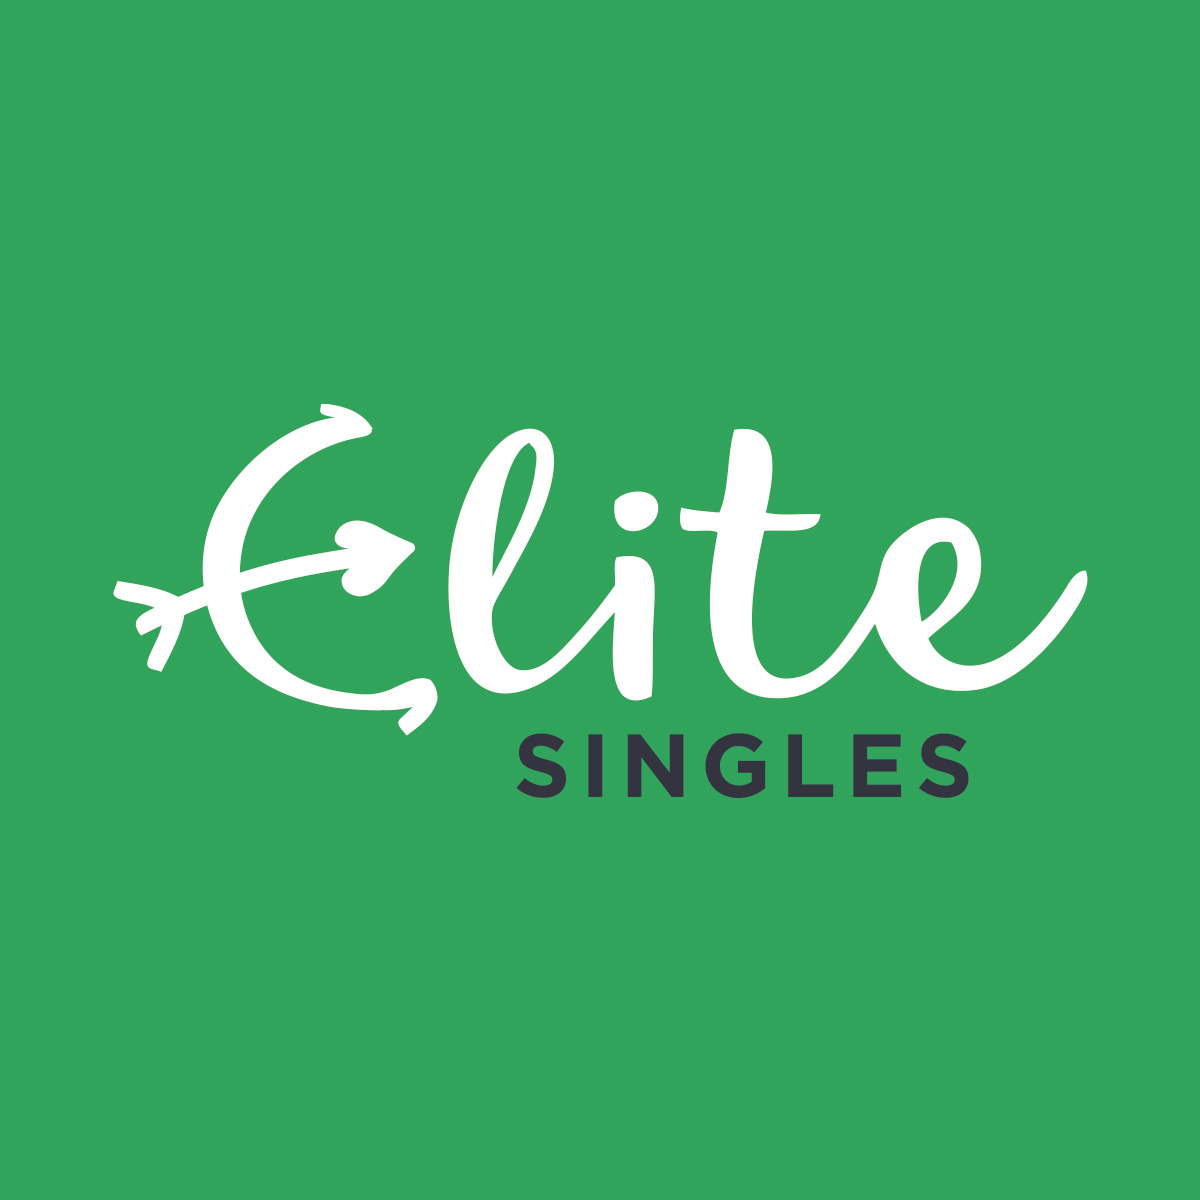 Elite Singles Login Uk